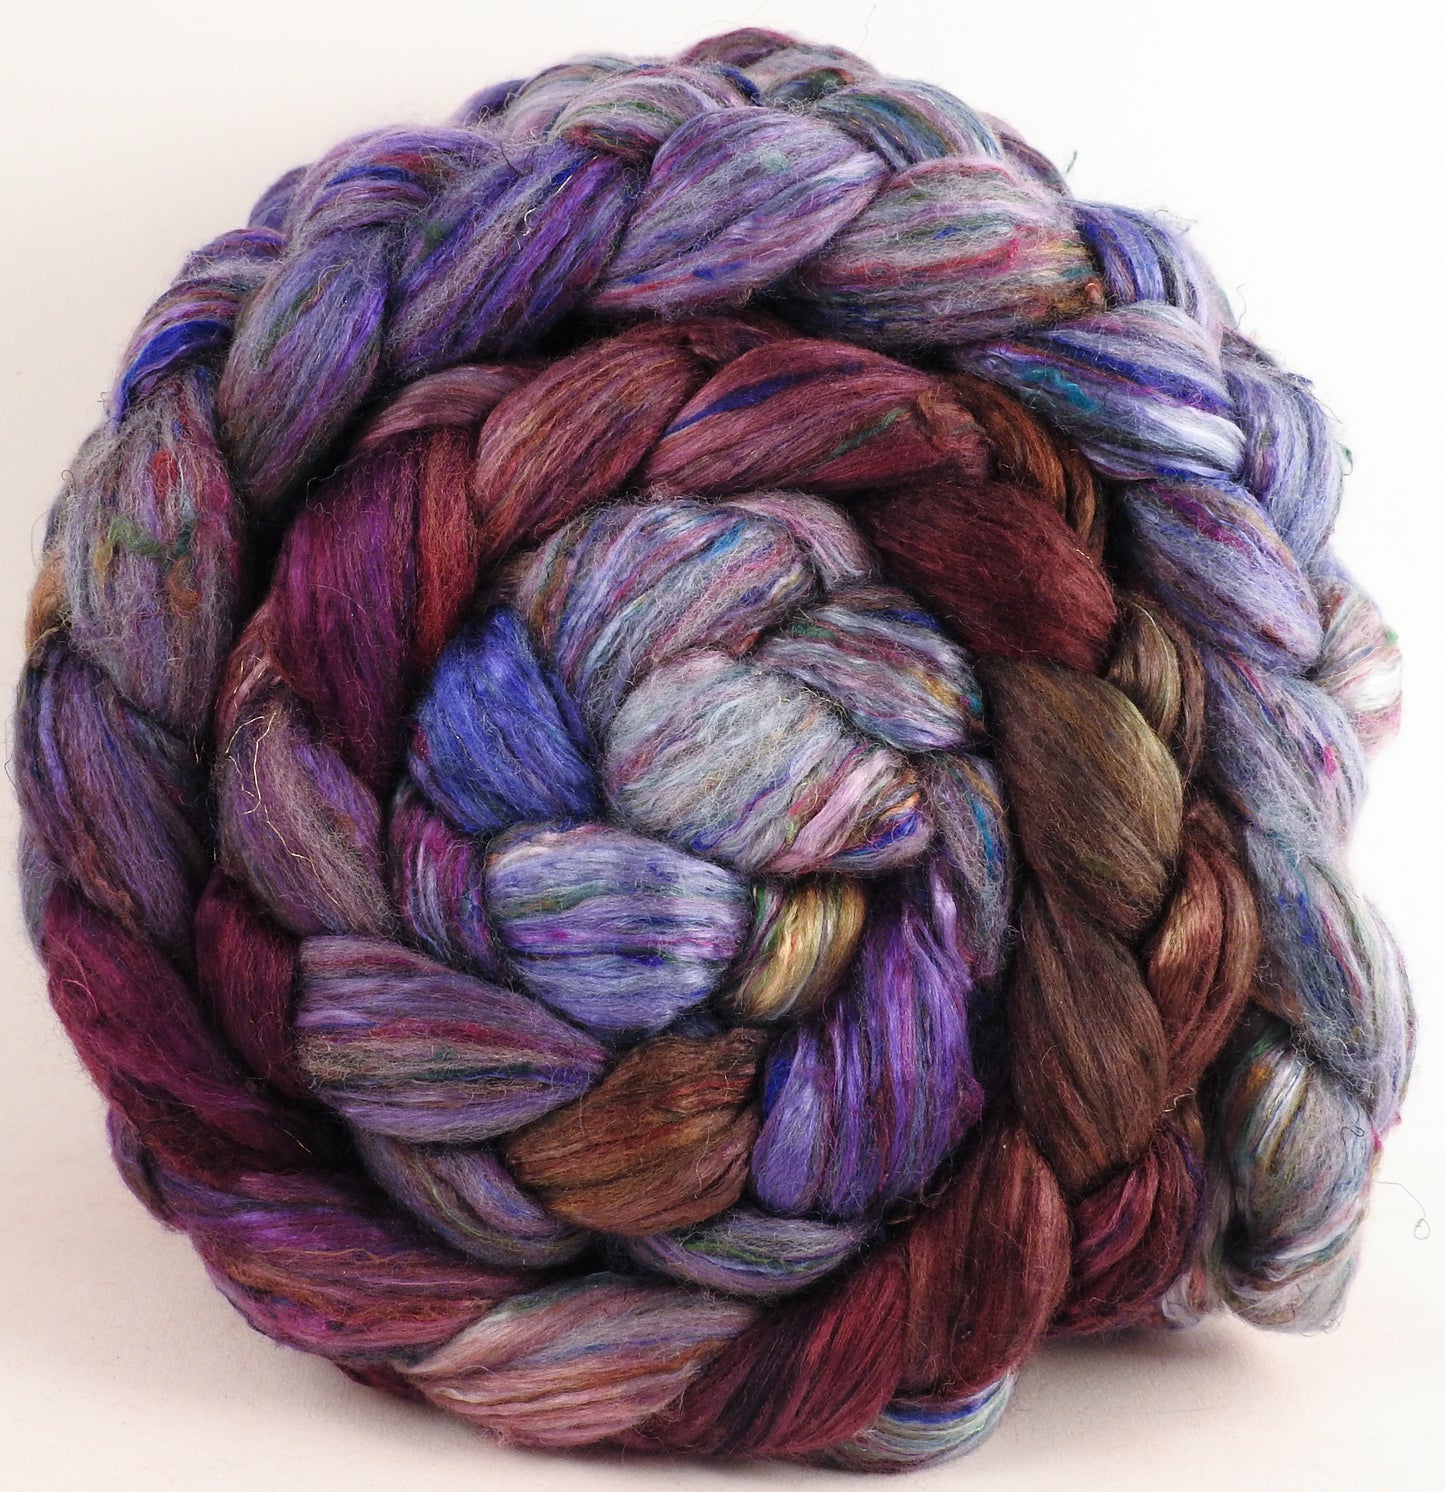 Batt in a Braid #39 -Provence (5.6 oz)- Falkland Merino/ Mulberry Silk / Sari Silk (50/25/25)